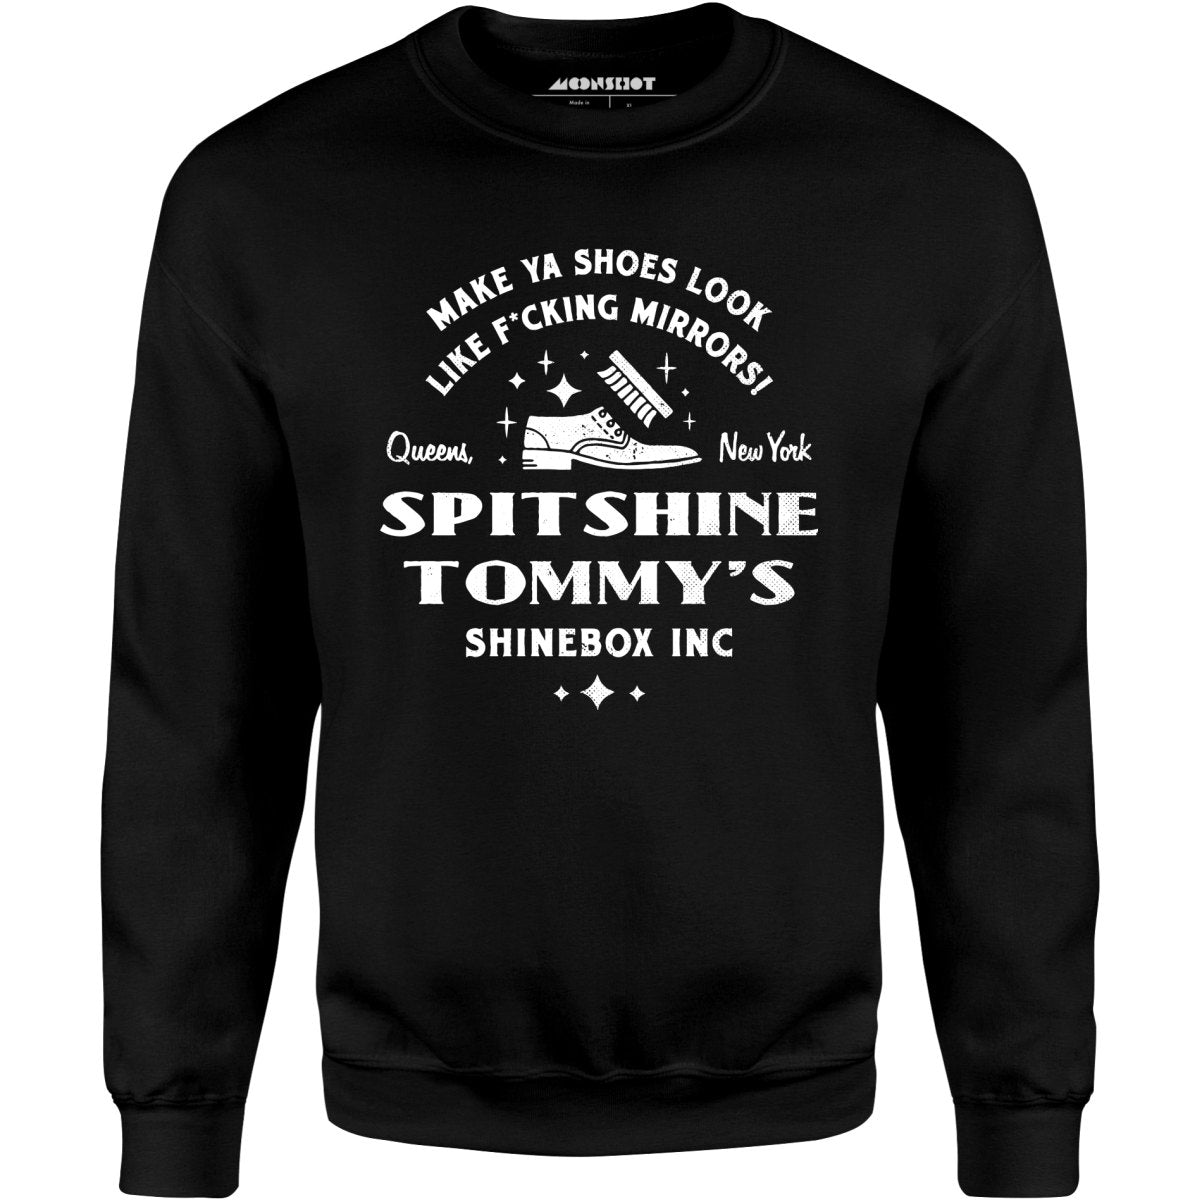 Spitshine Tommy's Shinebox Inc. - Unisex Sweatshirt